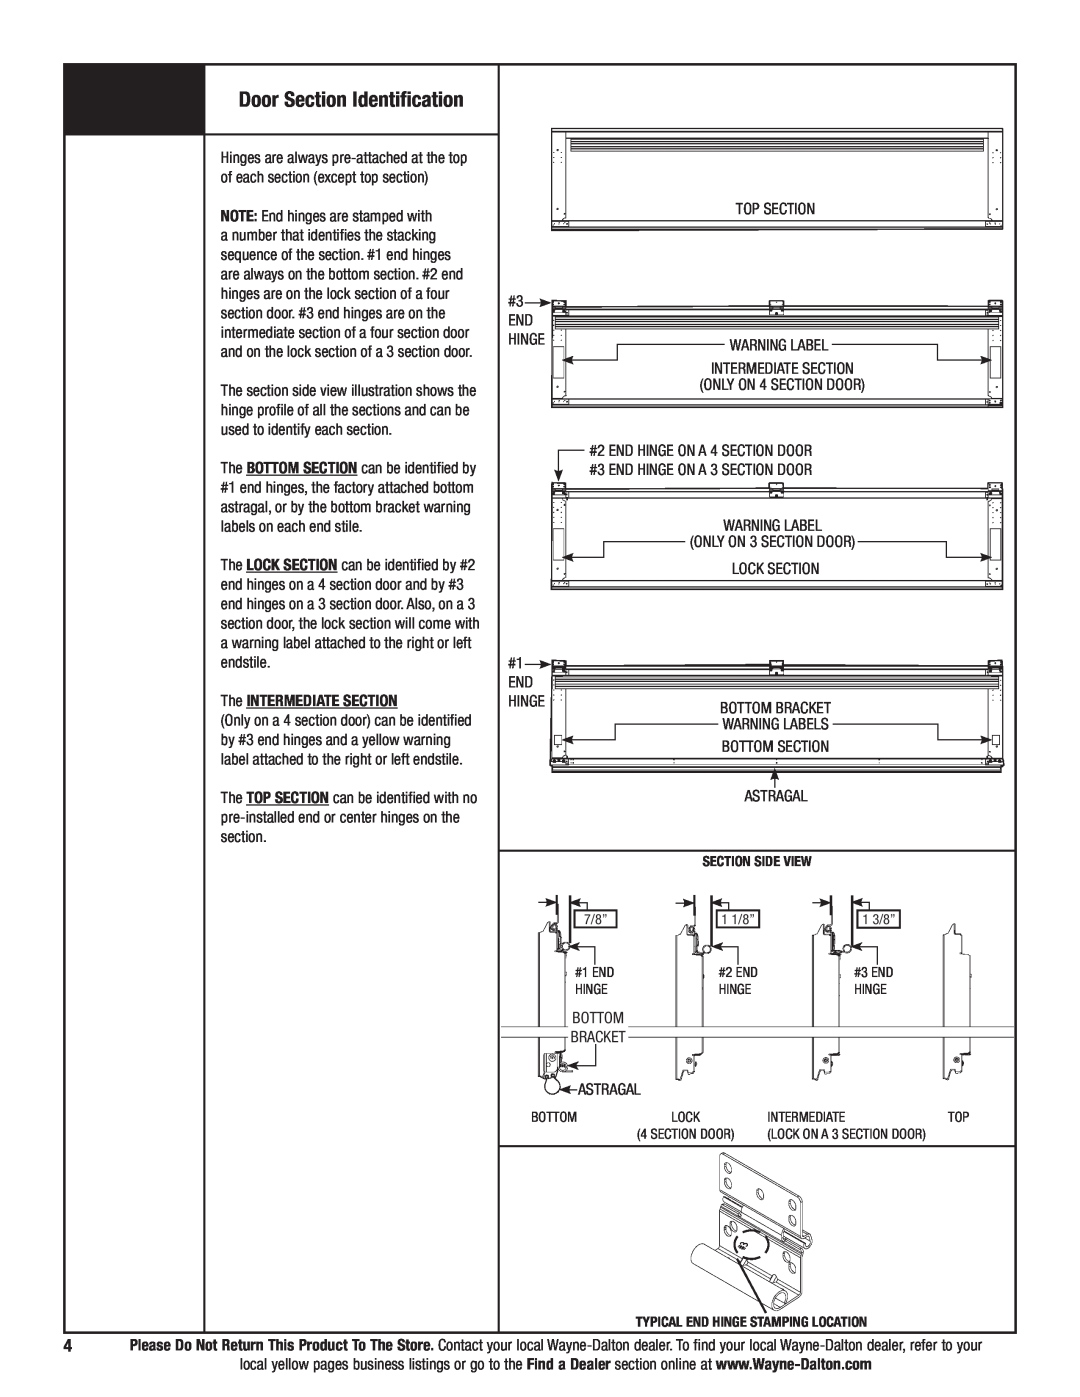 Wayne-Dalton 9700 installation instructions Door Section Identification 